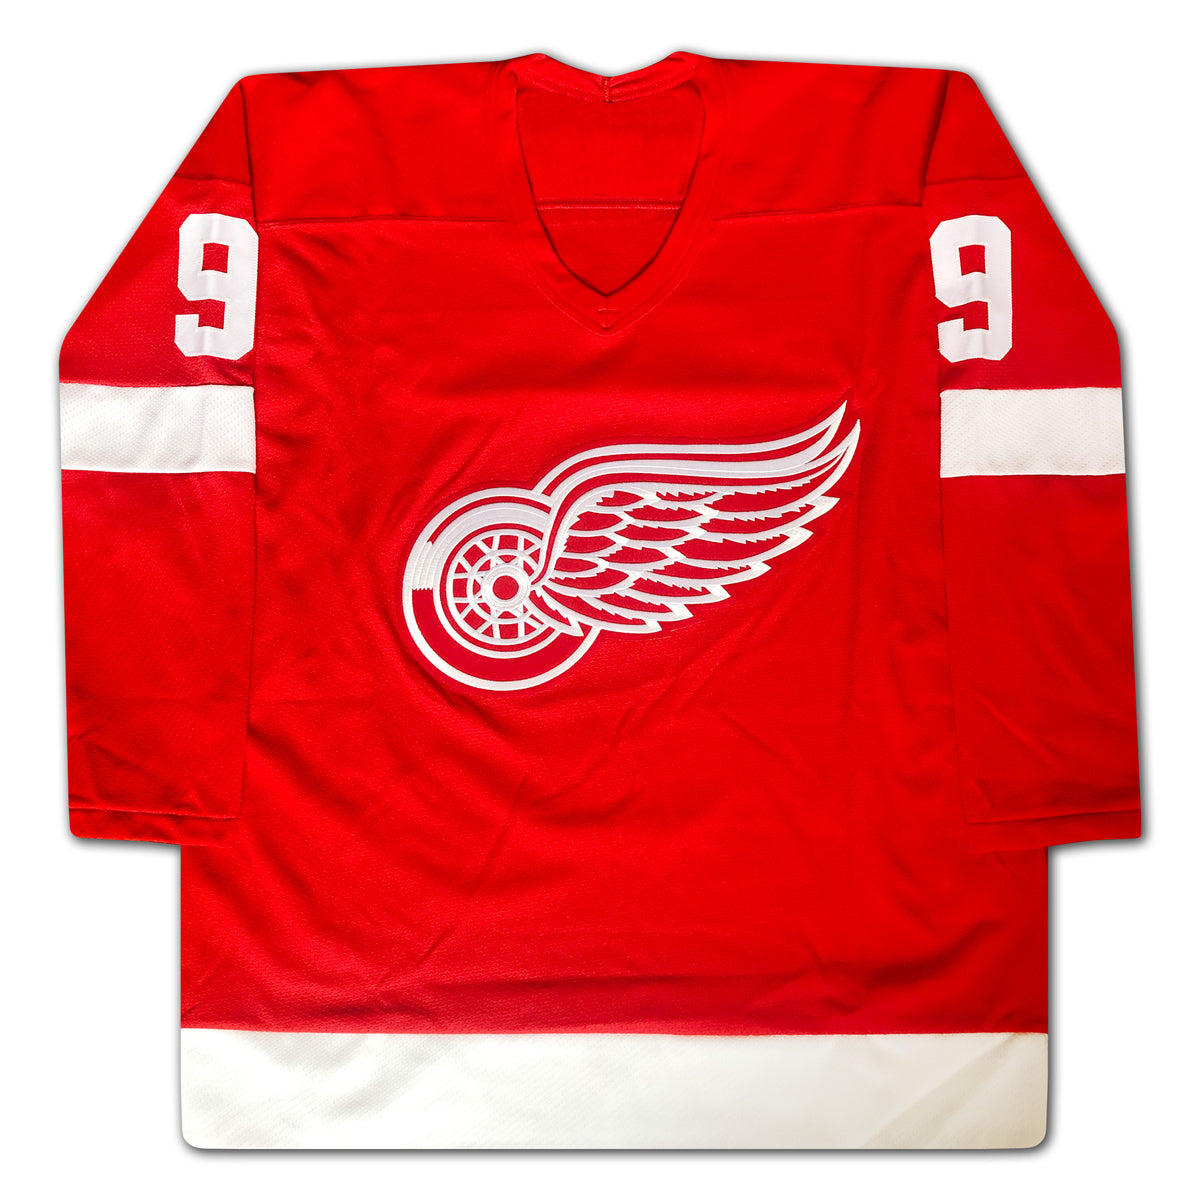 Gordie Howe NHL Original Autographed Jerseys for sale